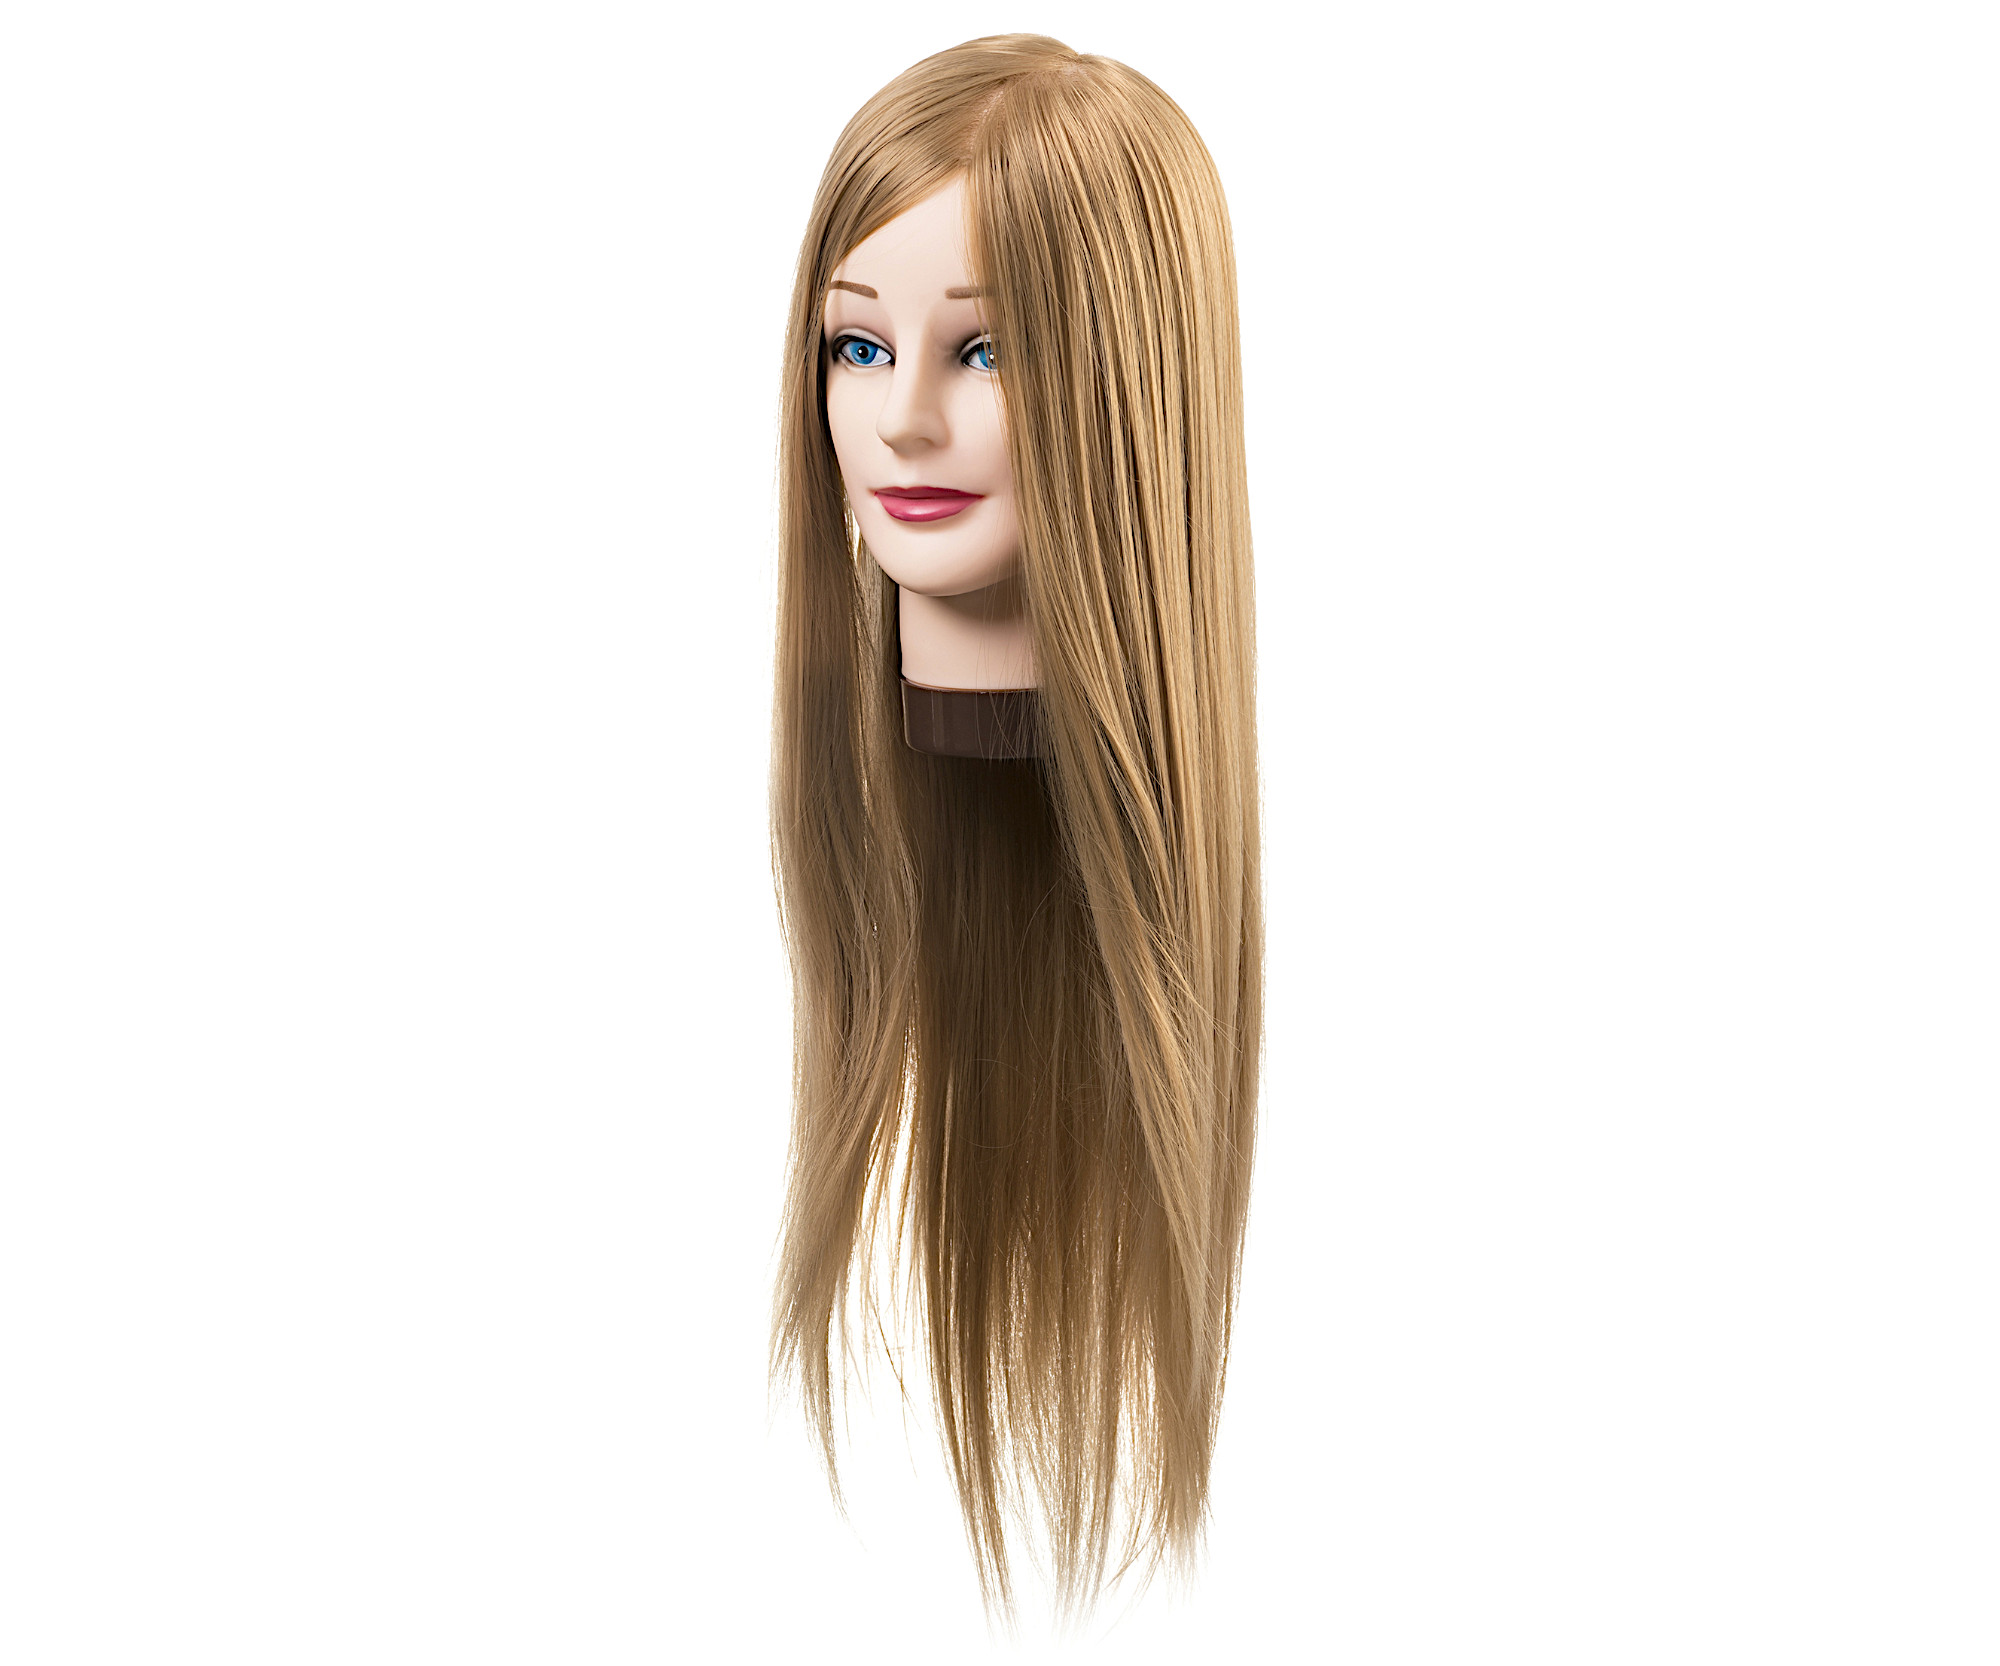 Cvičná hlava s umělými vlasy Eurostil Profesional - blond, 55-60 cm (04956) + DÁREK ZDARMA